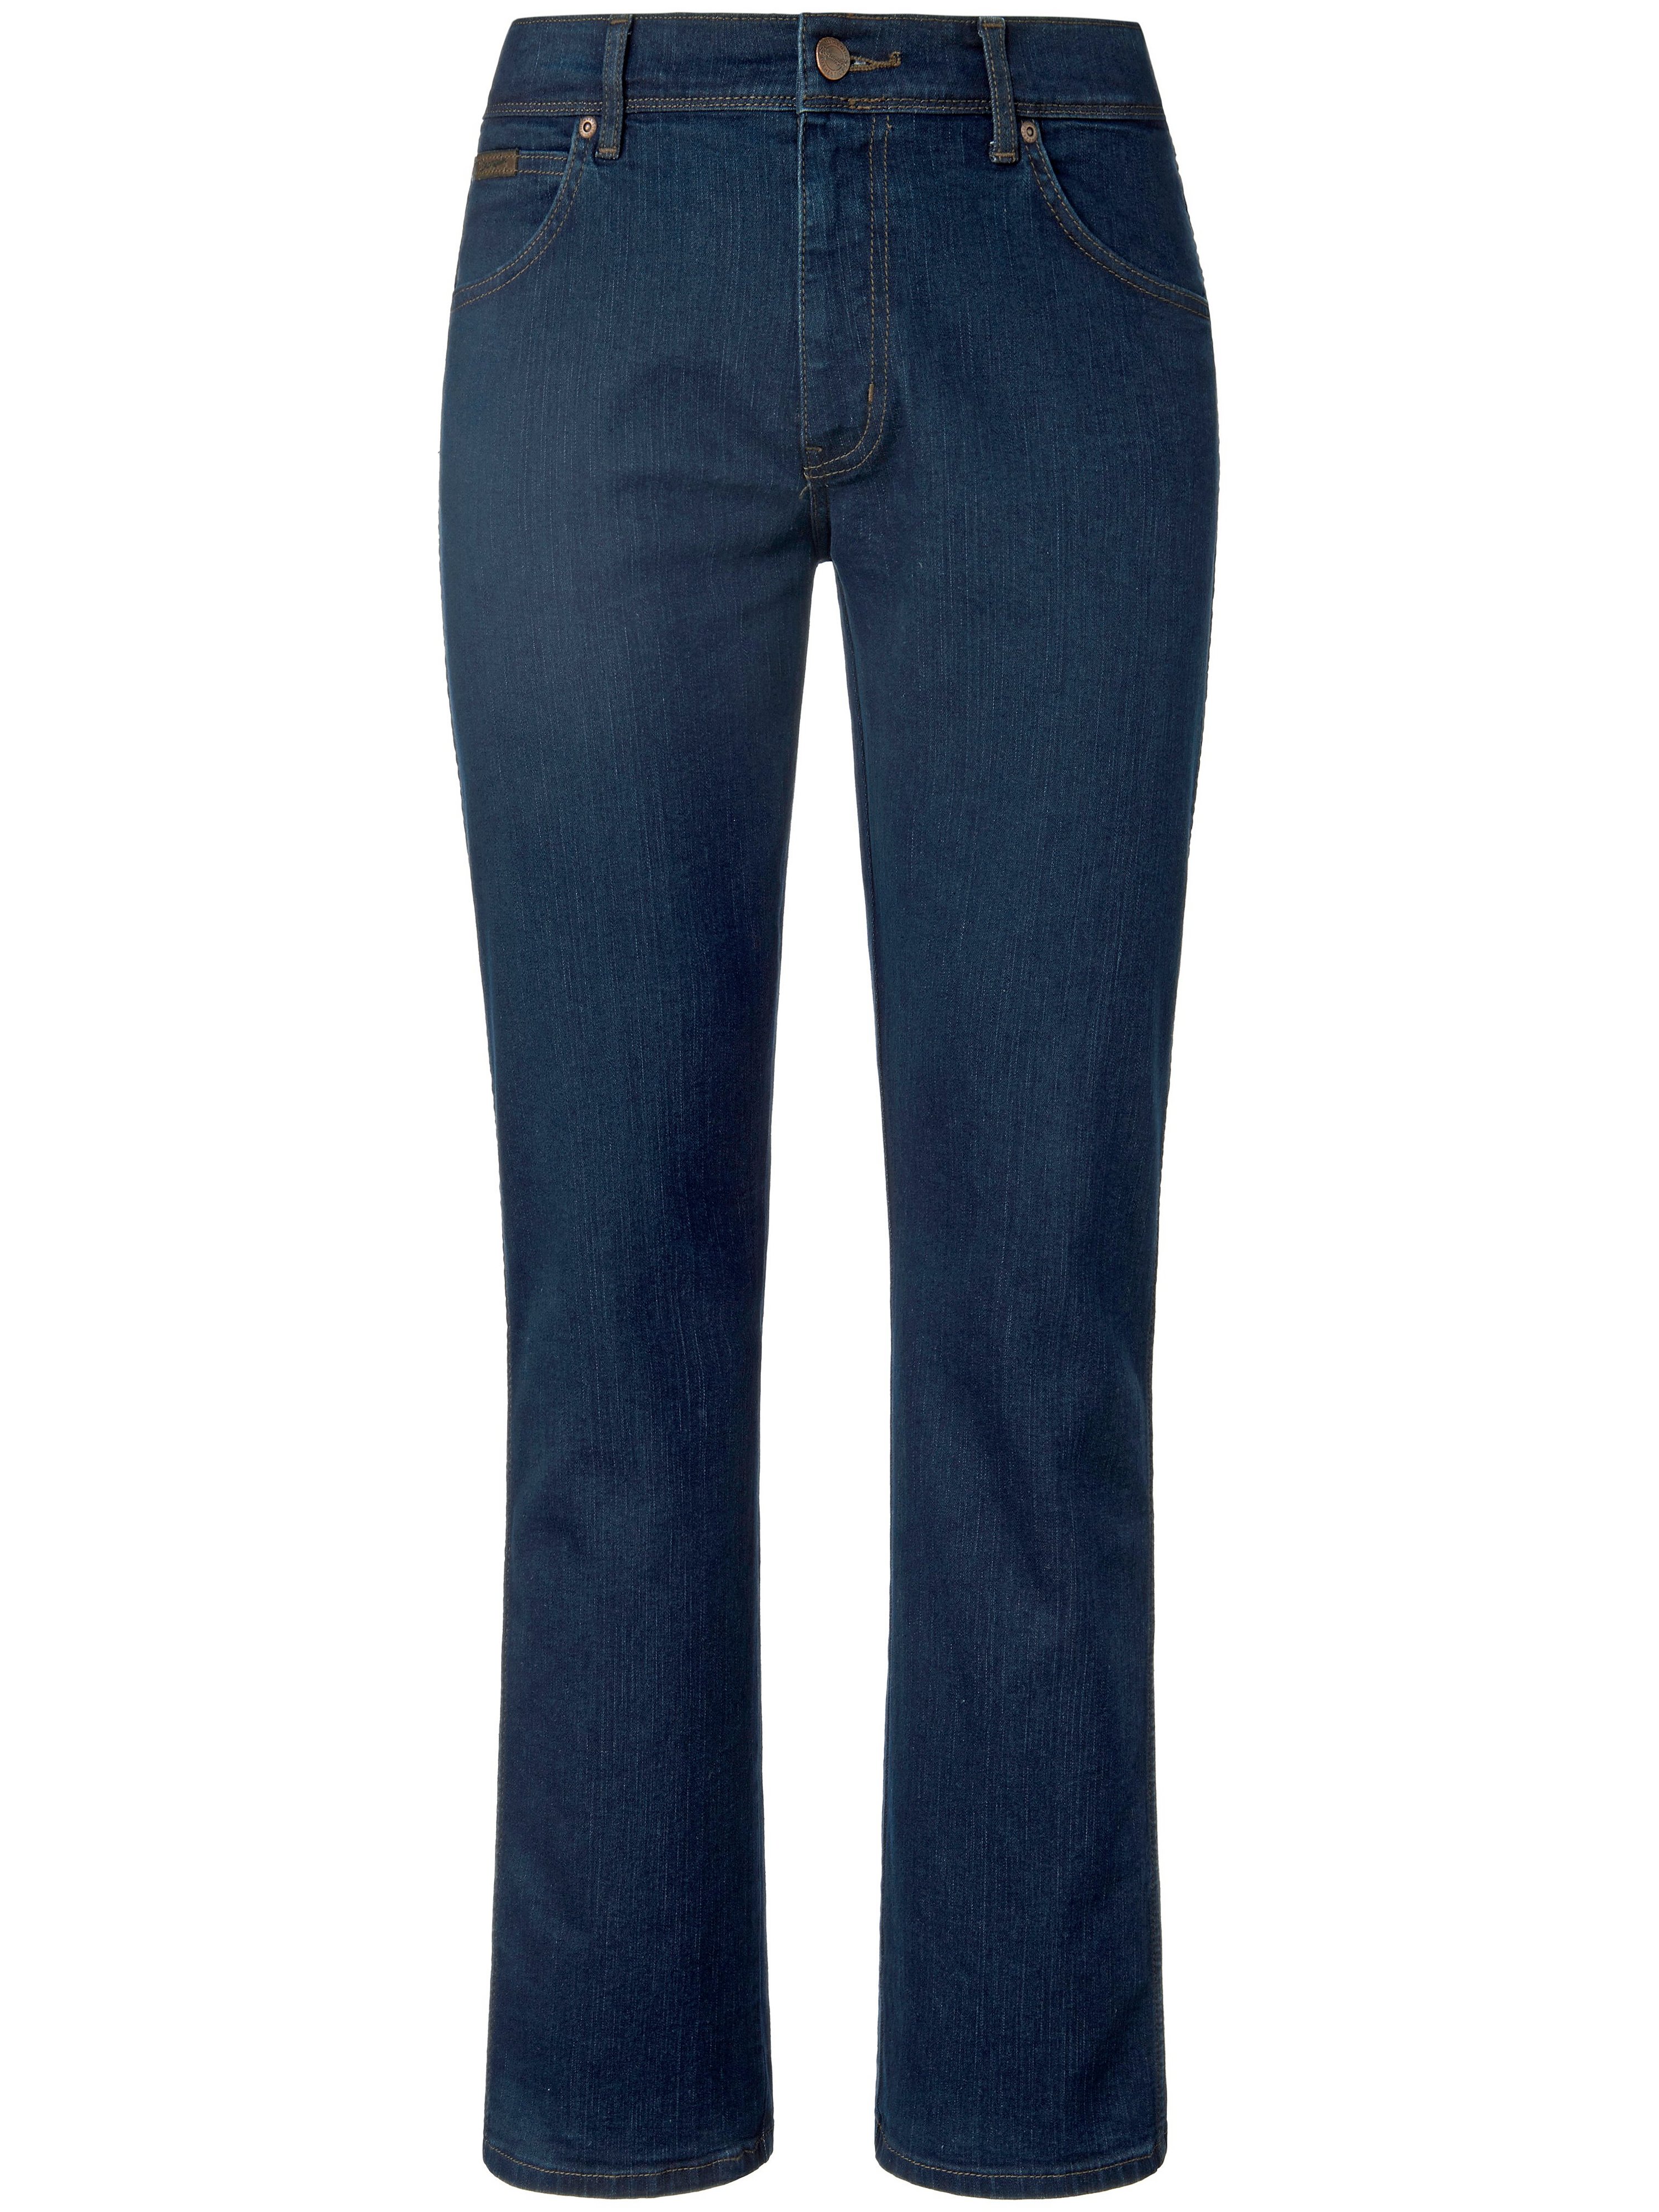 Jeans, Inch 32 Wrangler blau Größe: 34